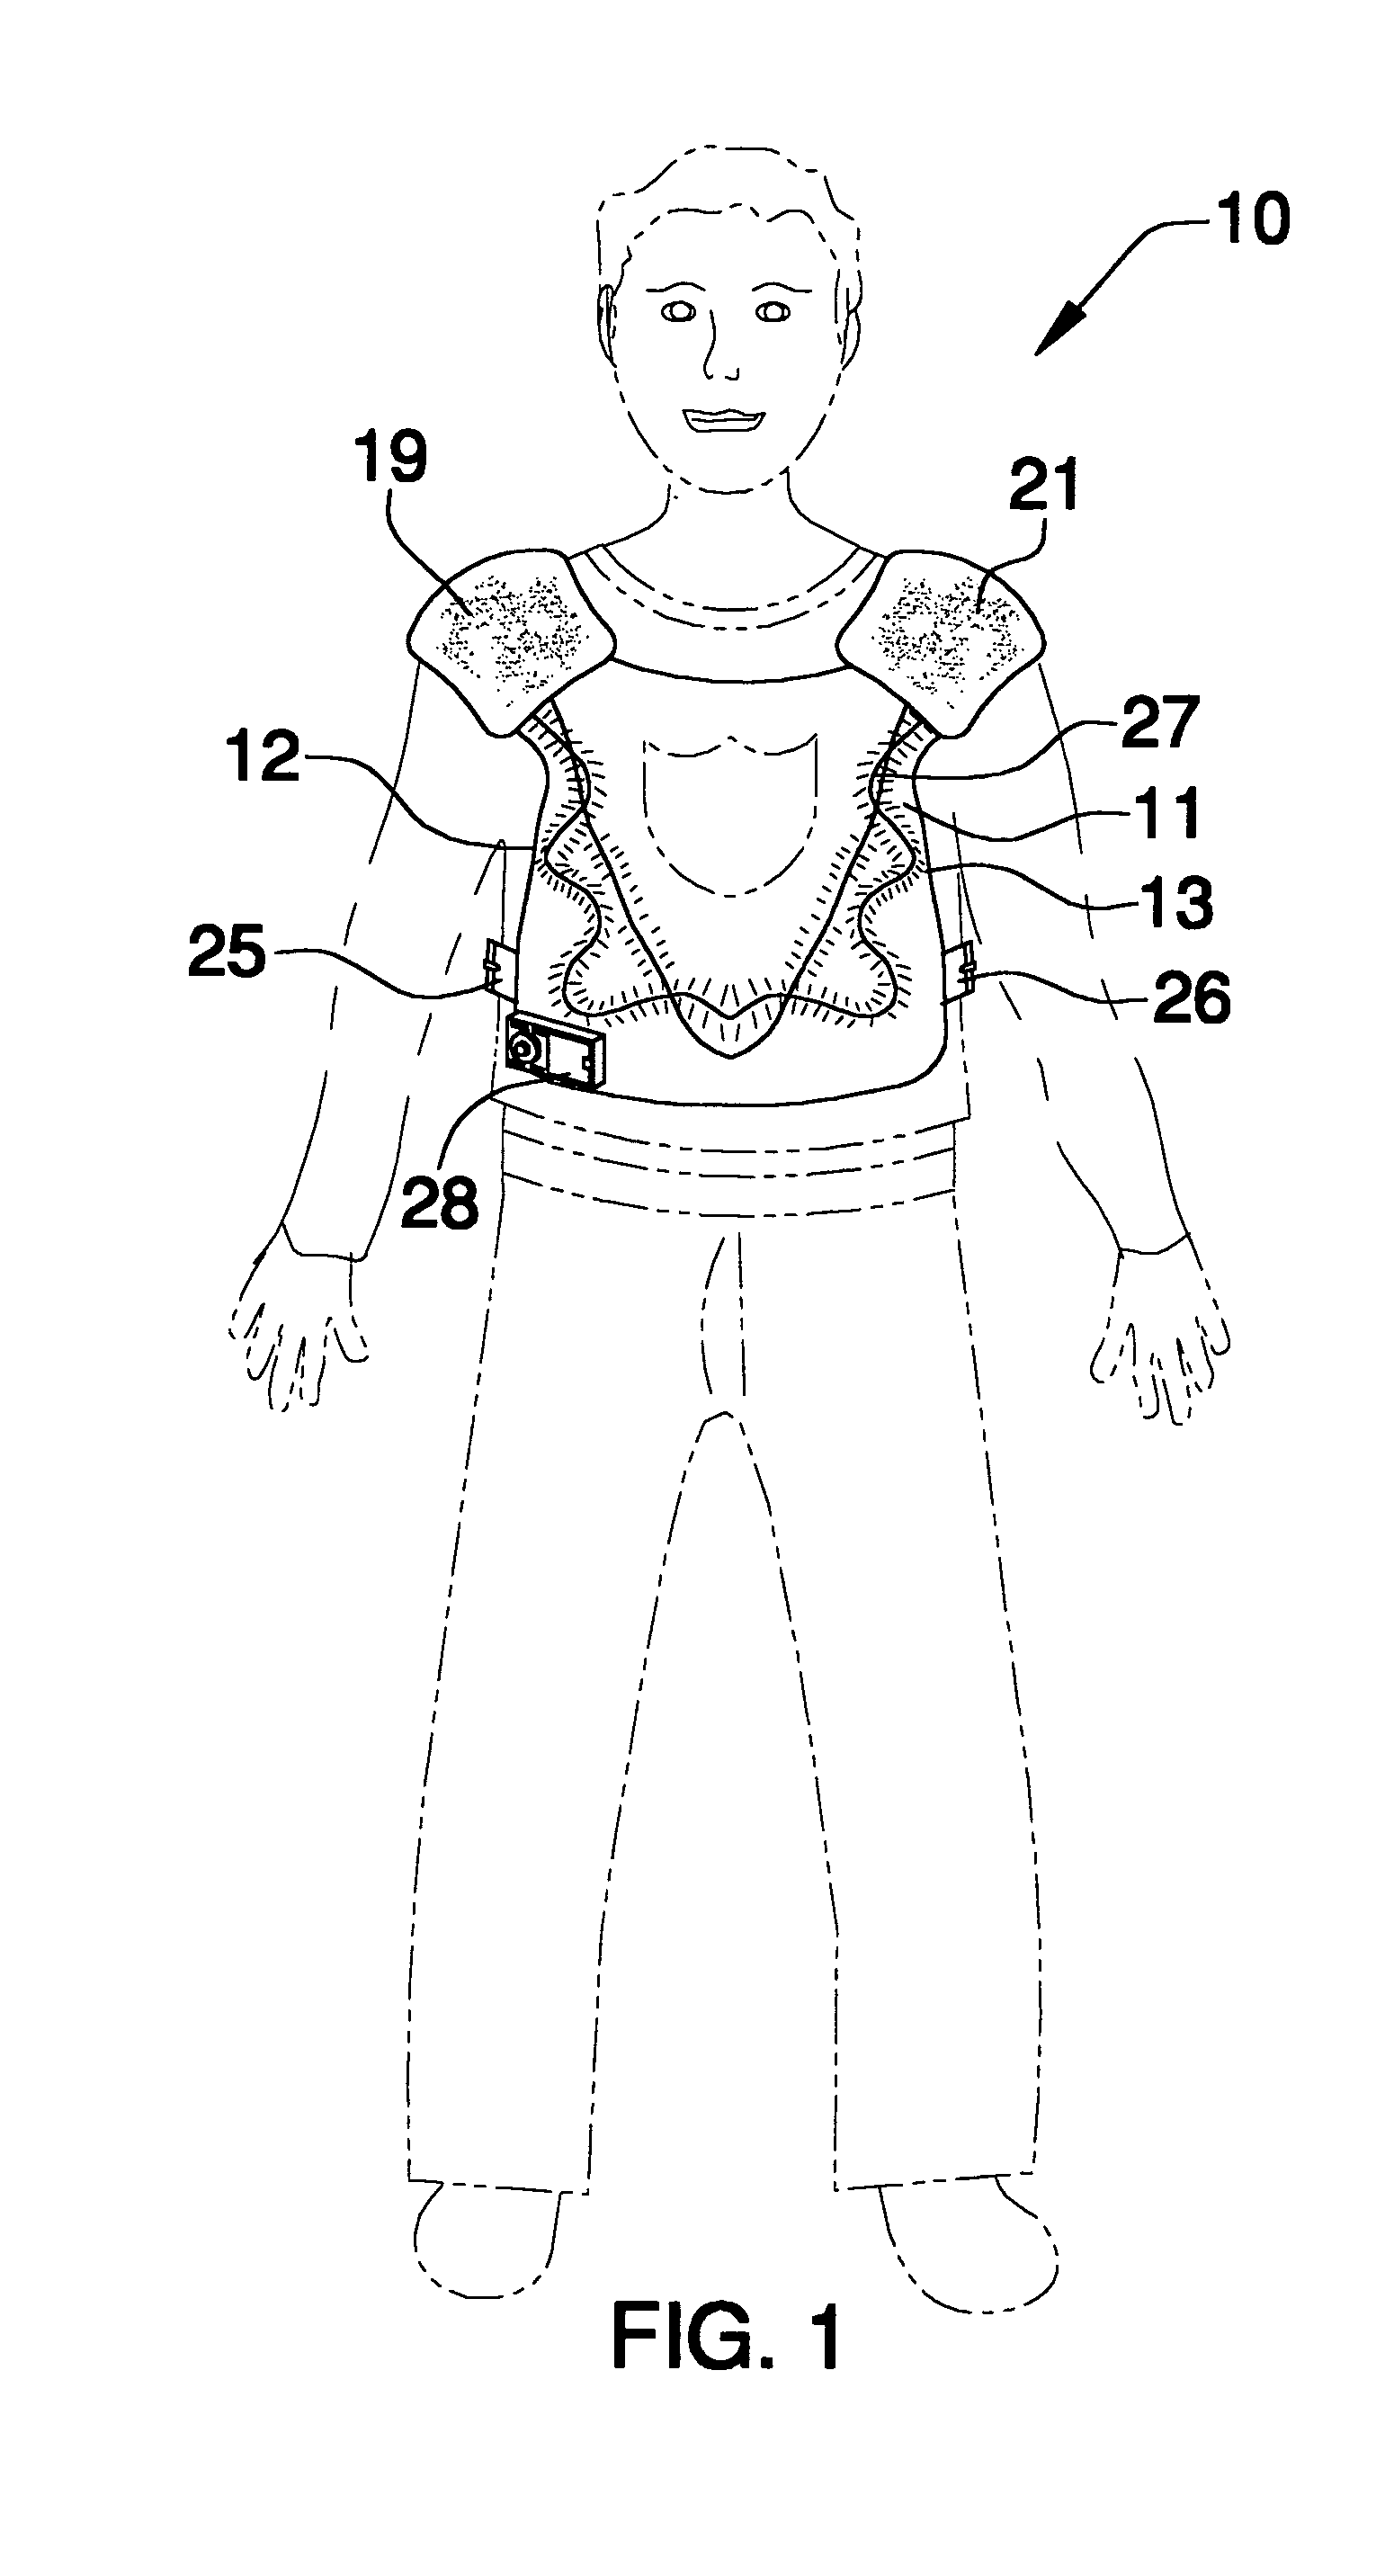 Illuminated chest protection device